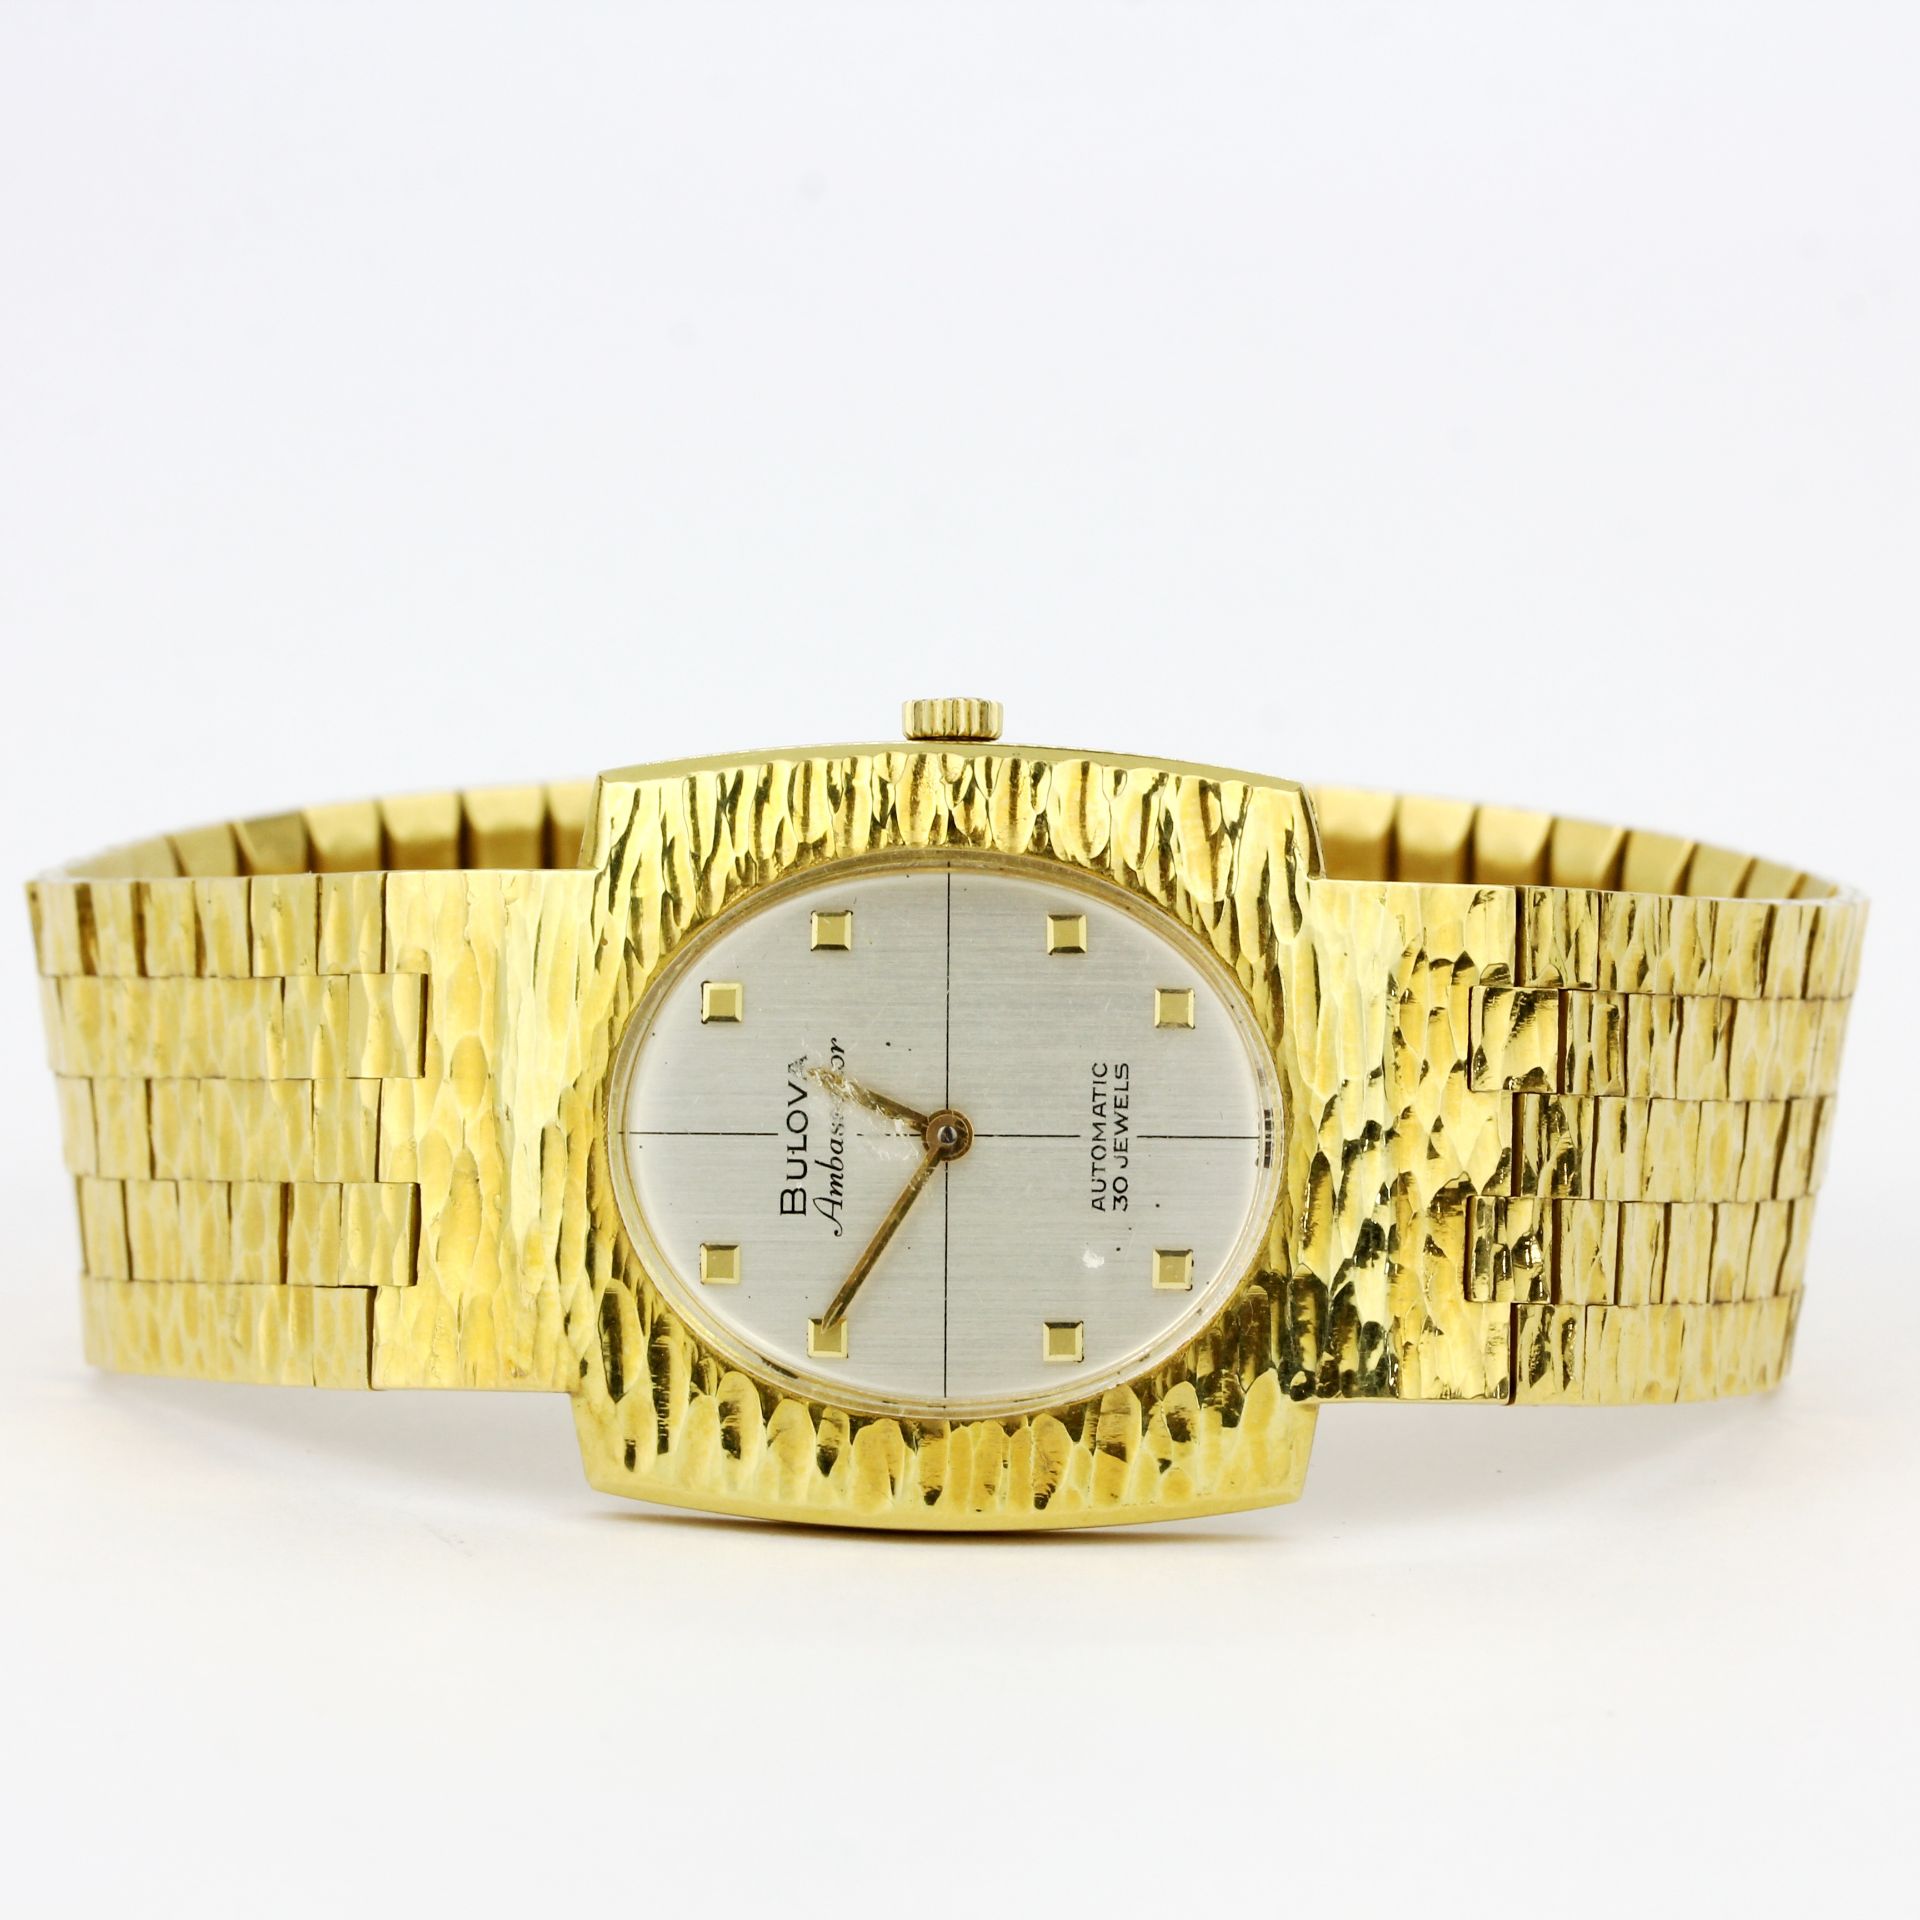 A gentleman's 18ct yellow gold Bulova wrist watch, serial number 1301650.